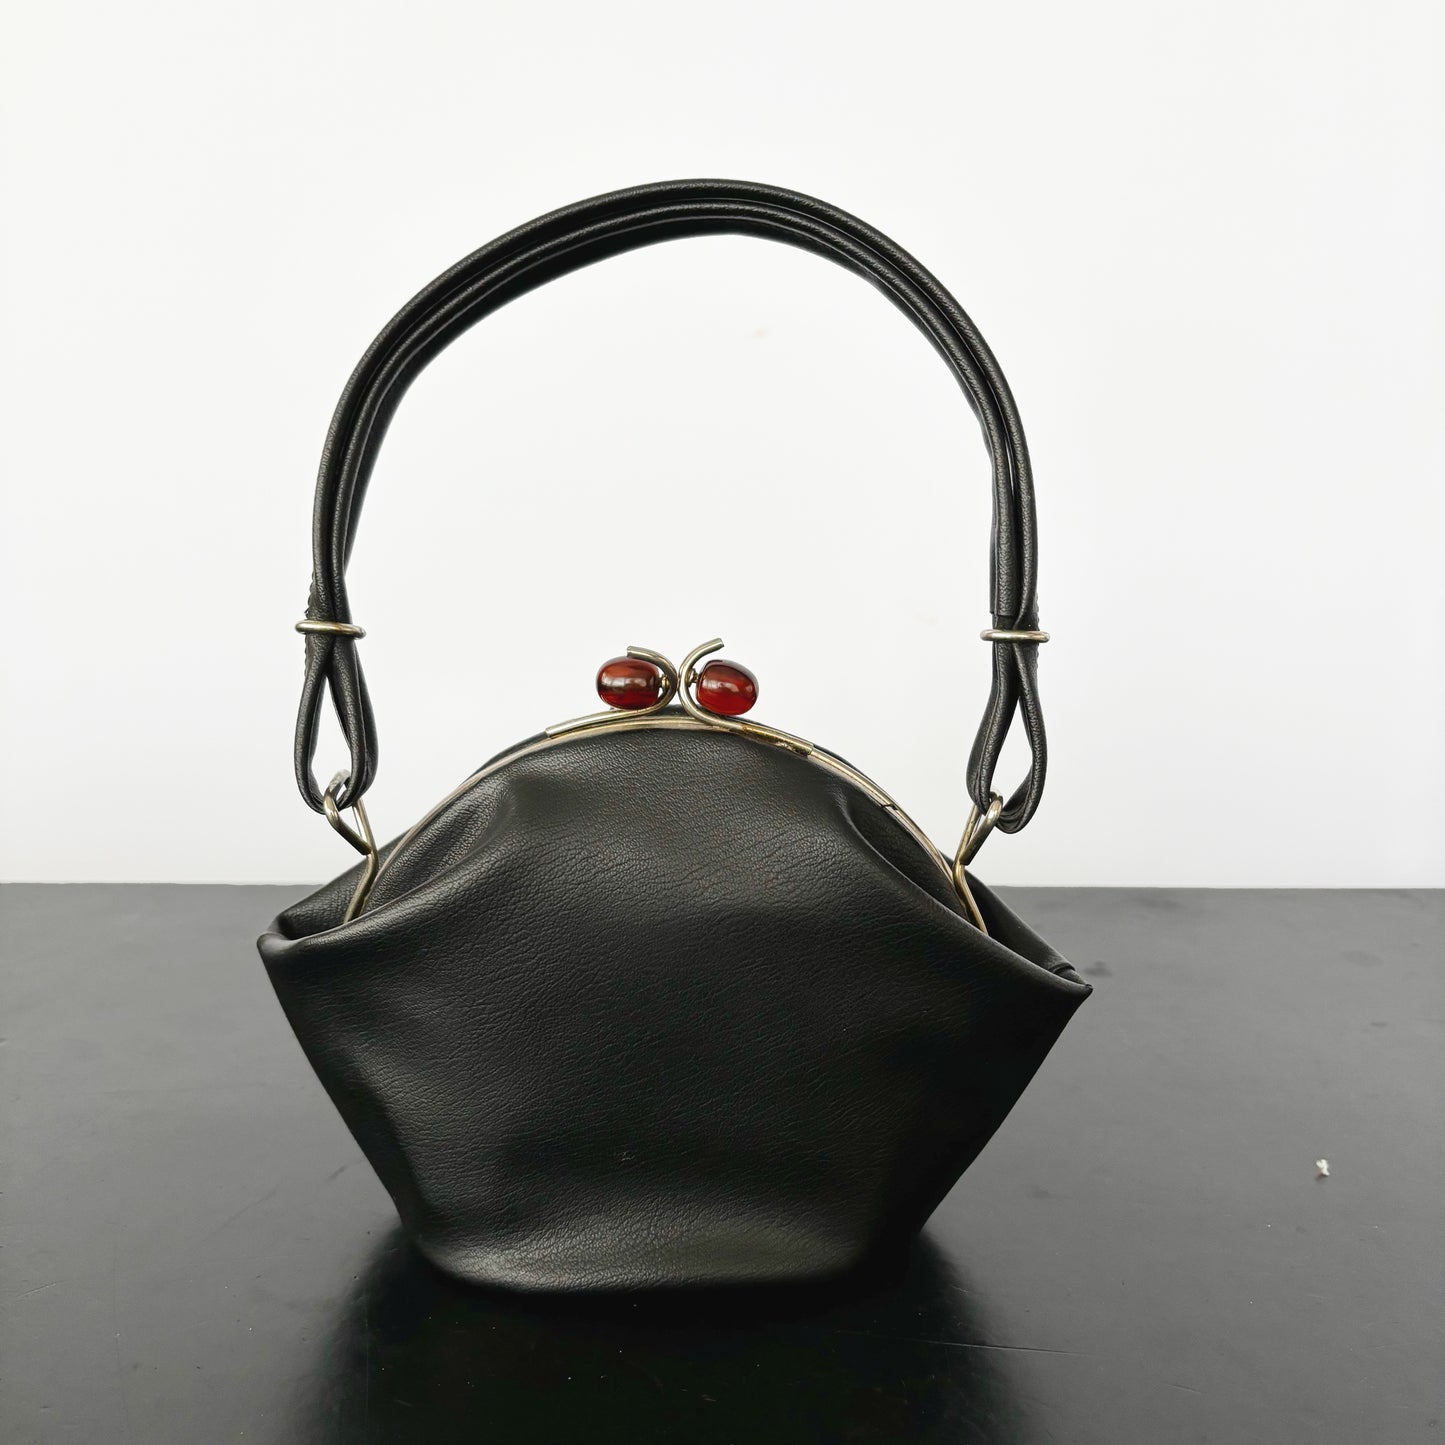 1940s Leather Handbag